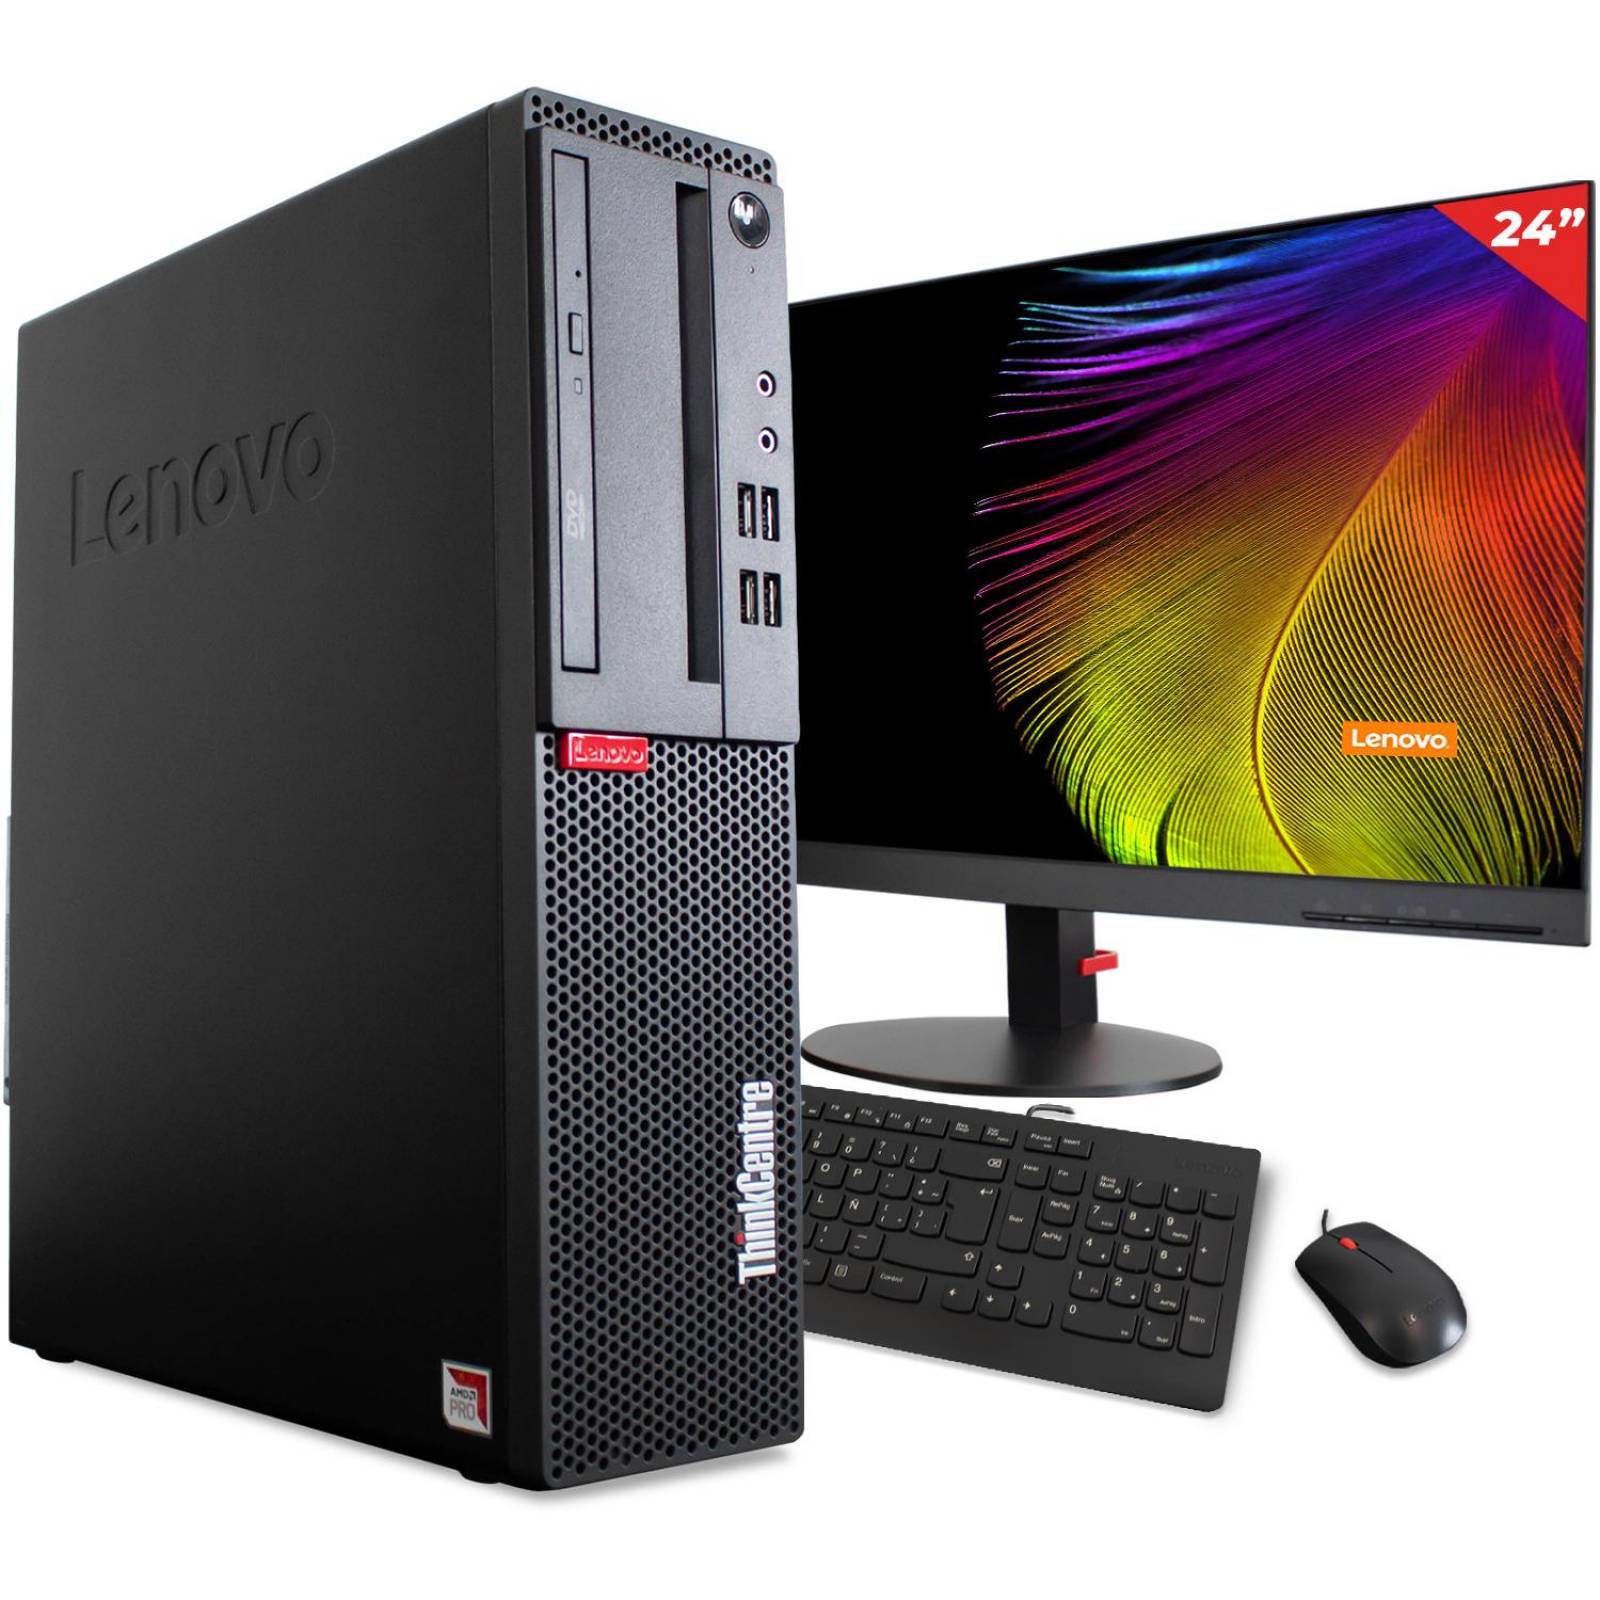 PC Gamer AMD Radeon R7 Lenovo A12 PRO 9800 8GB 1TB Monitor 24 